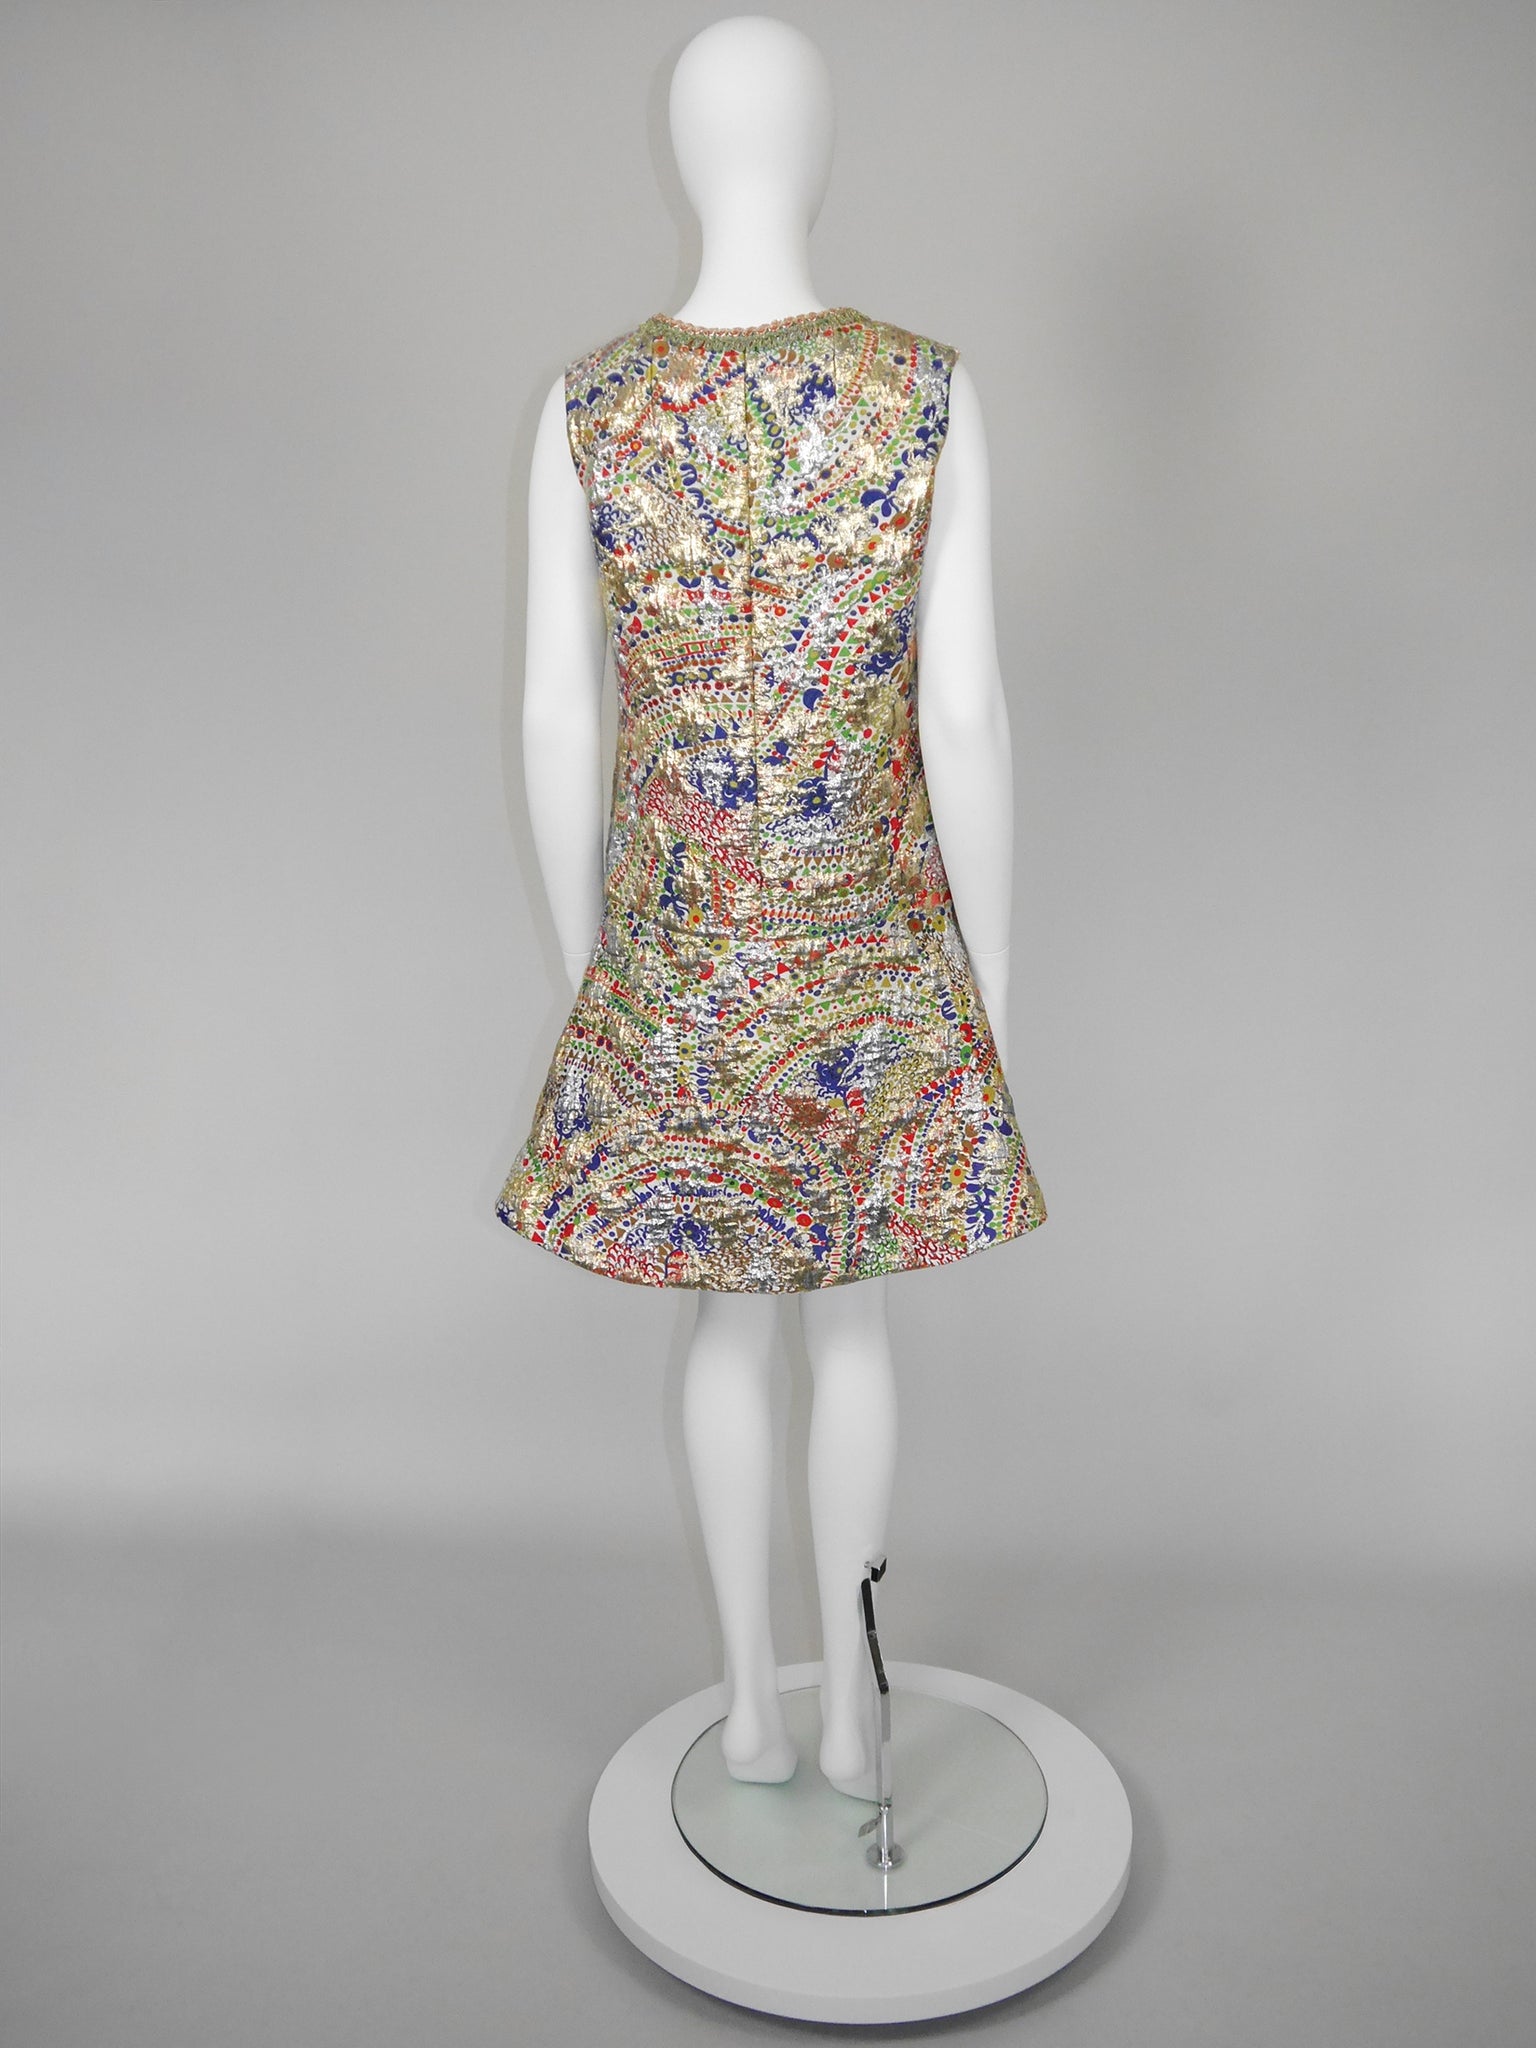 LANVIN 1960s Vintage Couture Metallic Brocade Party Evening Mini Dress Size L